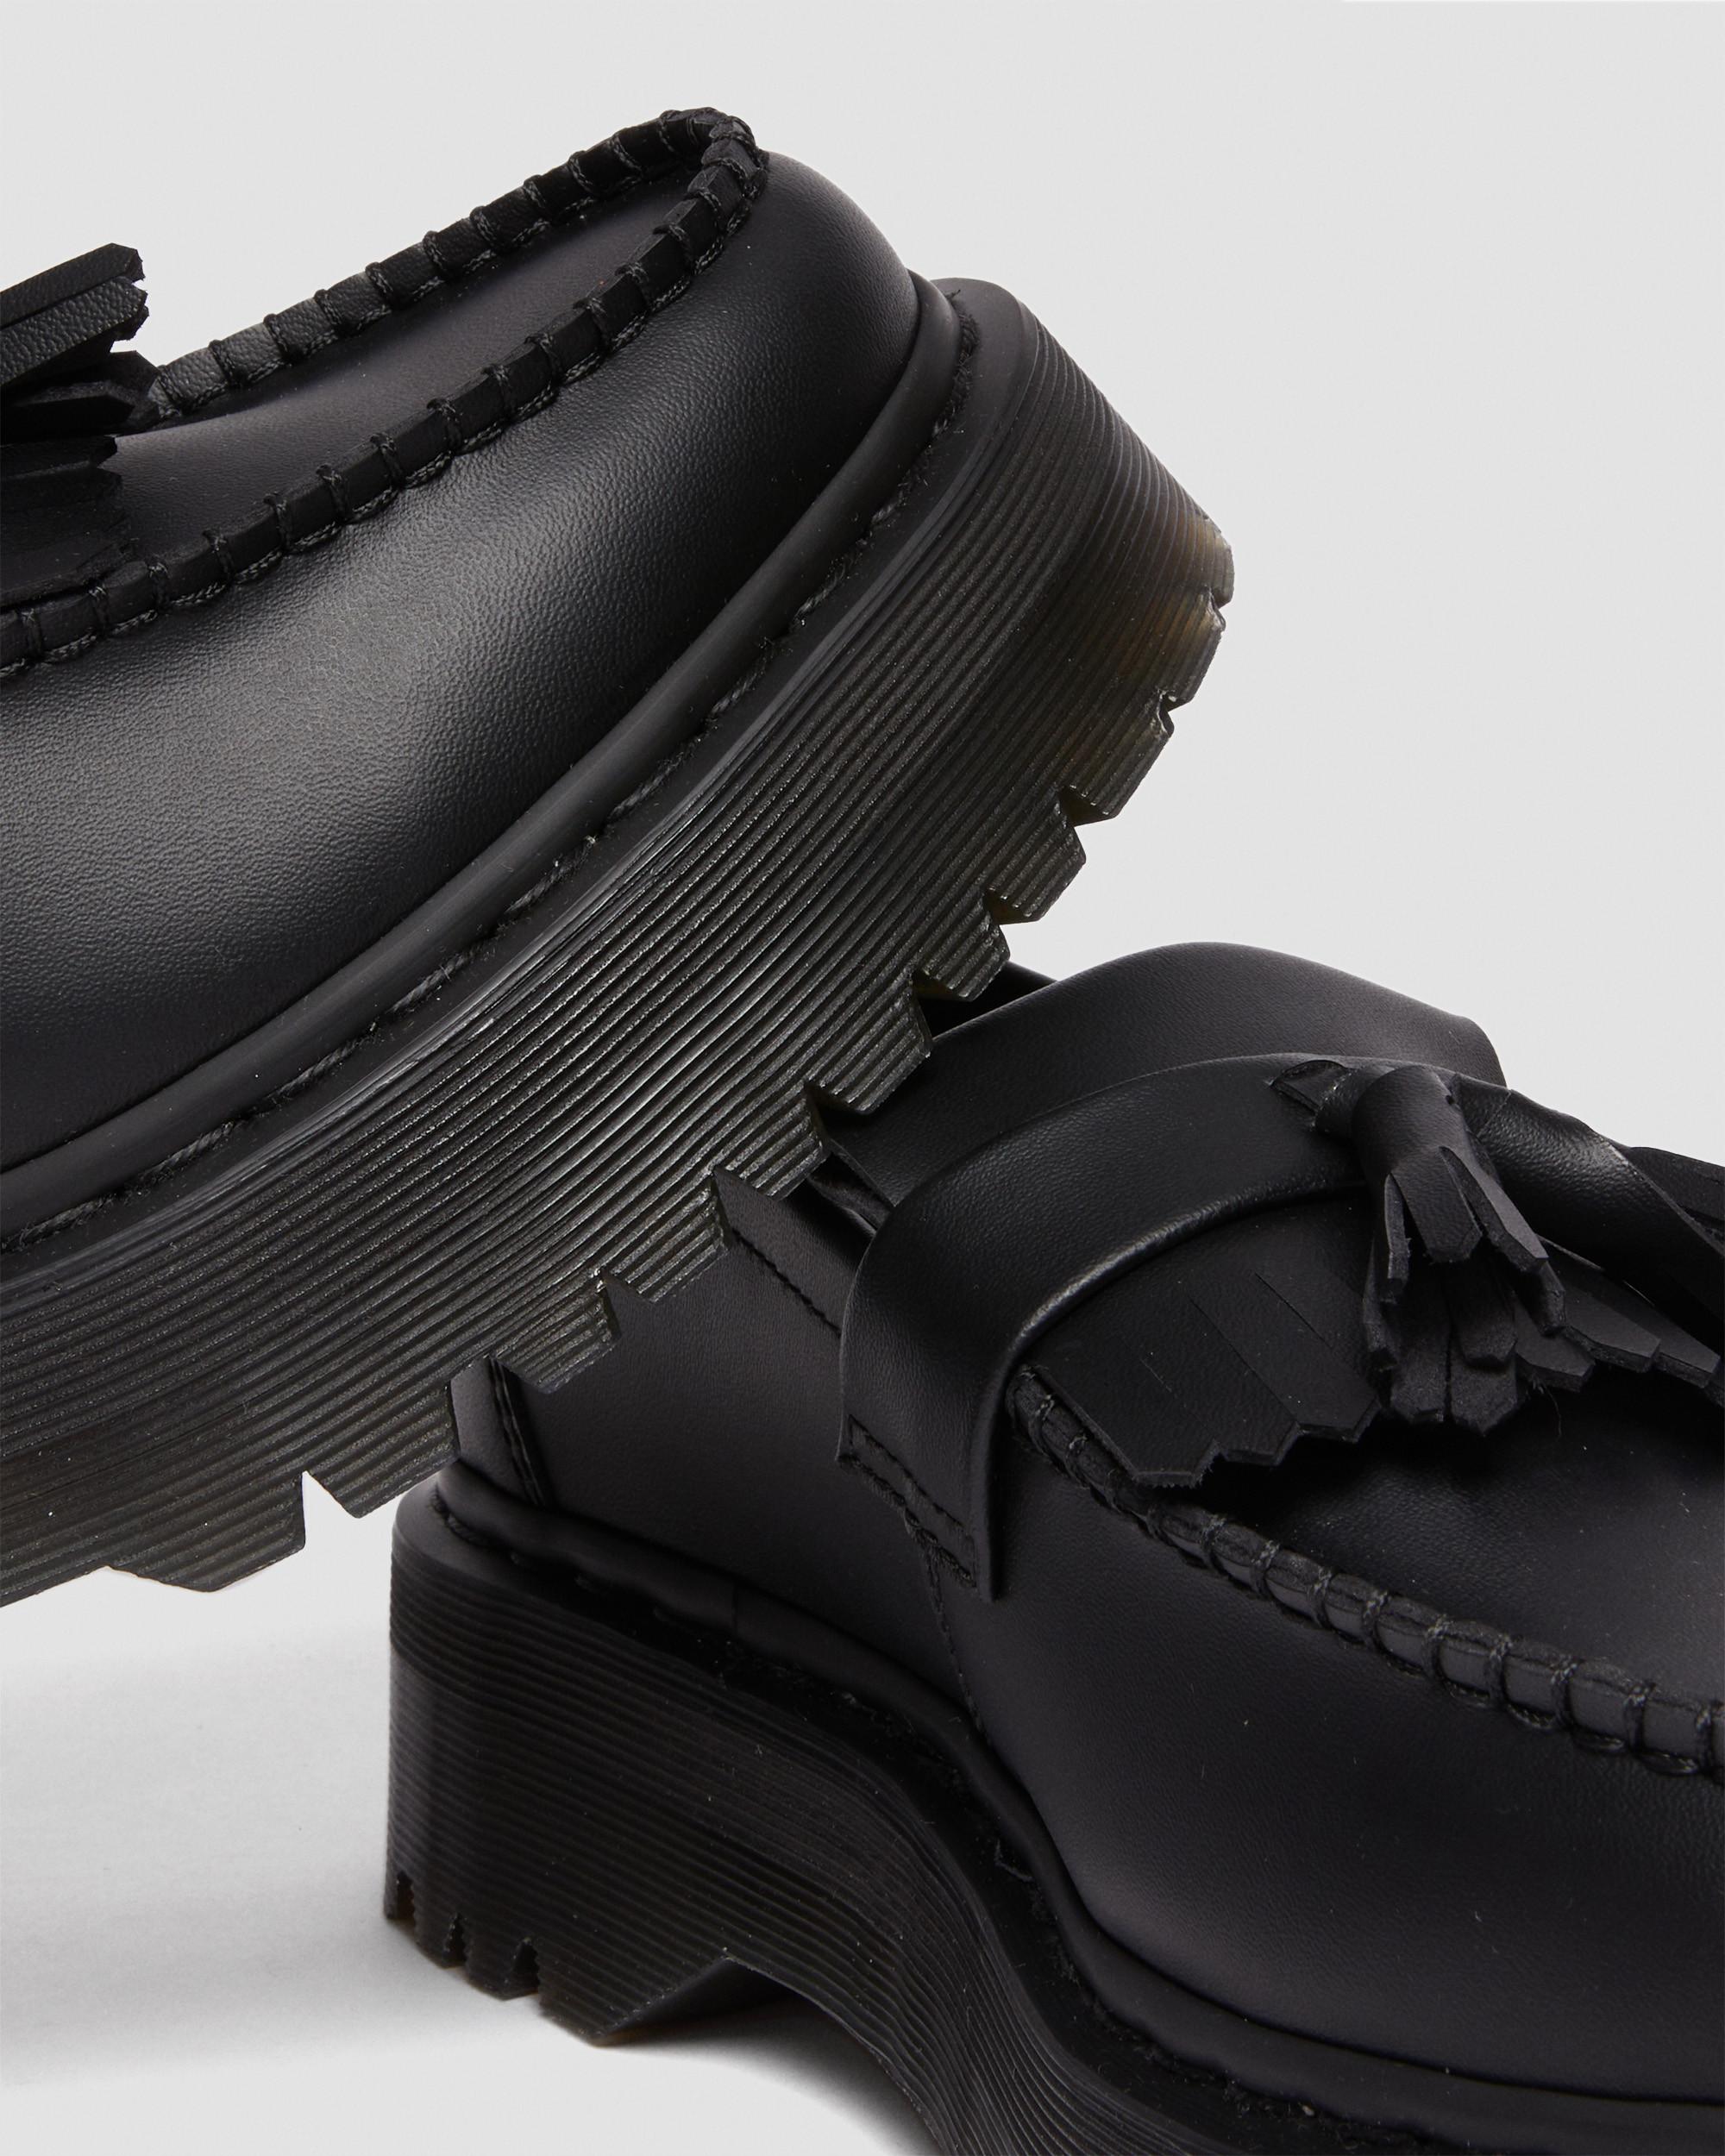 Adrian Quad Felix Vegan Platform Tassel Loafers in Black